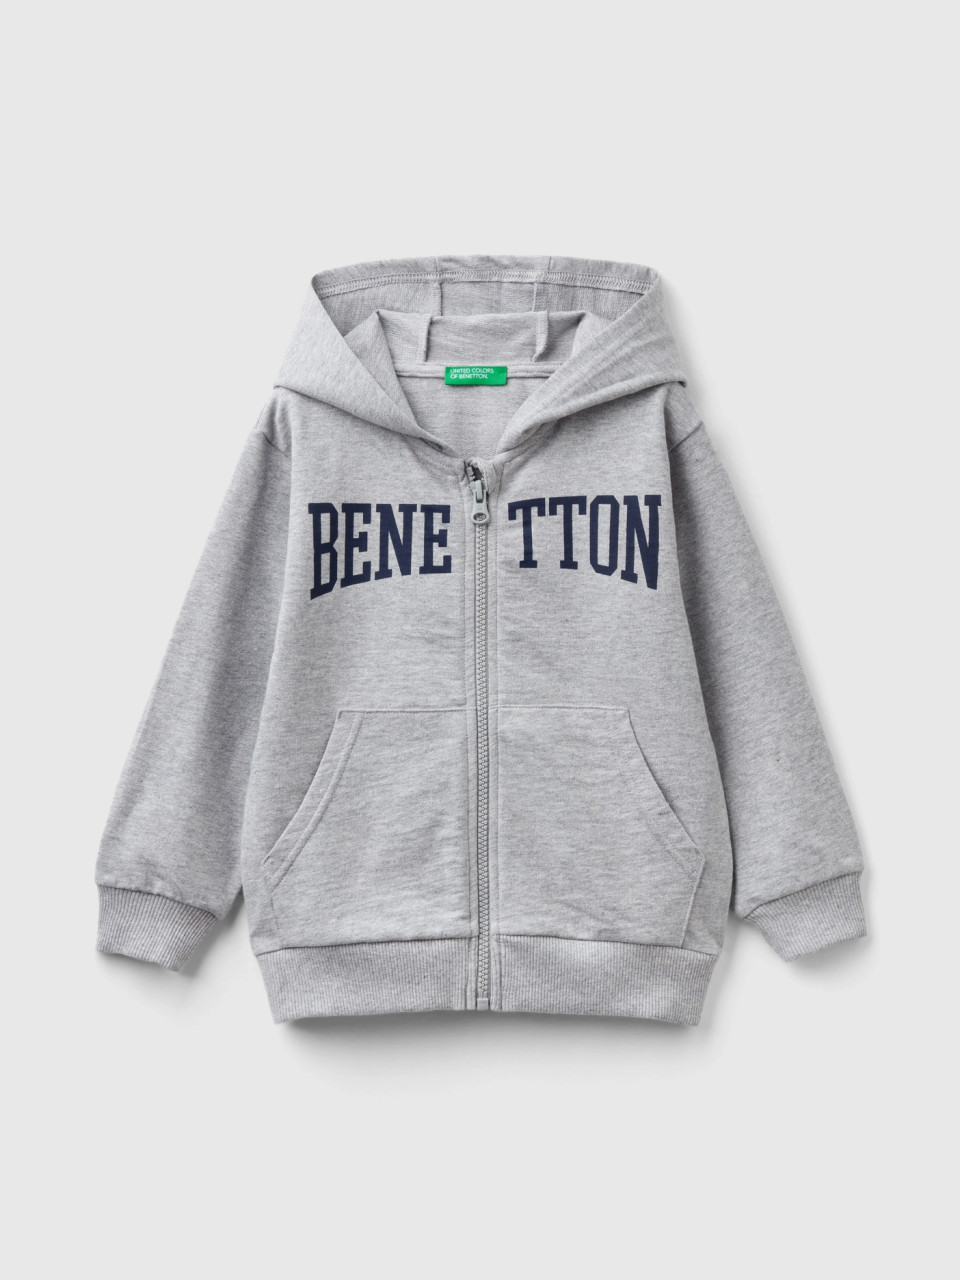 Benetton, Lightweight Sweatshirt With Zip, Light Gray, Kids